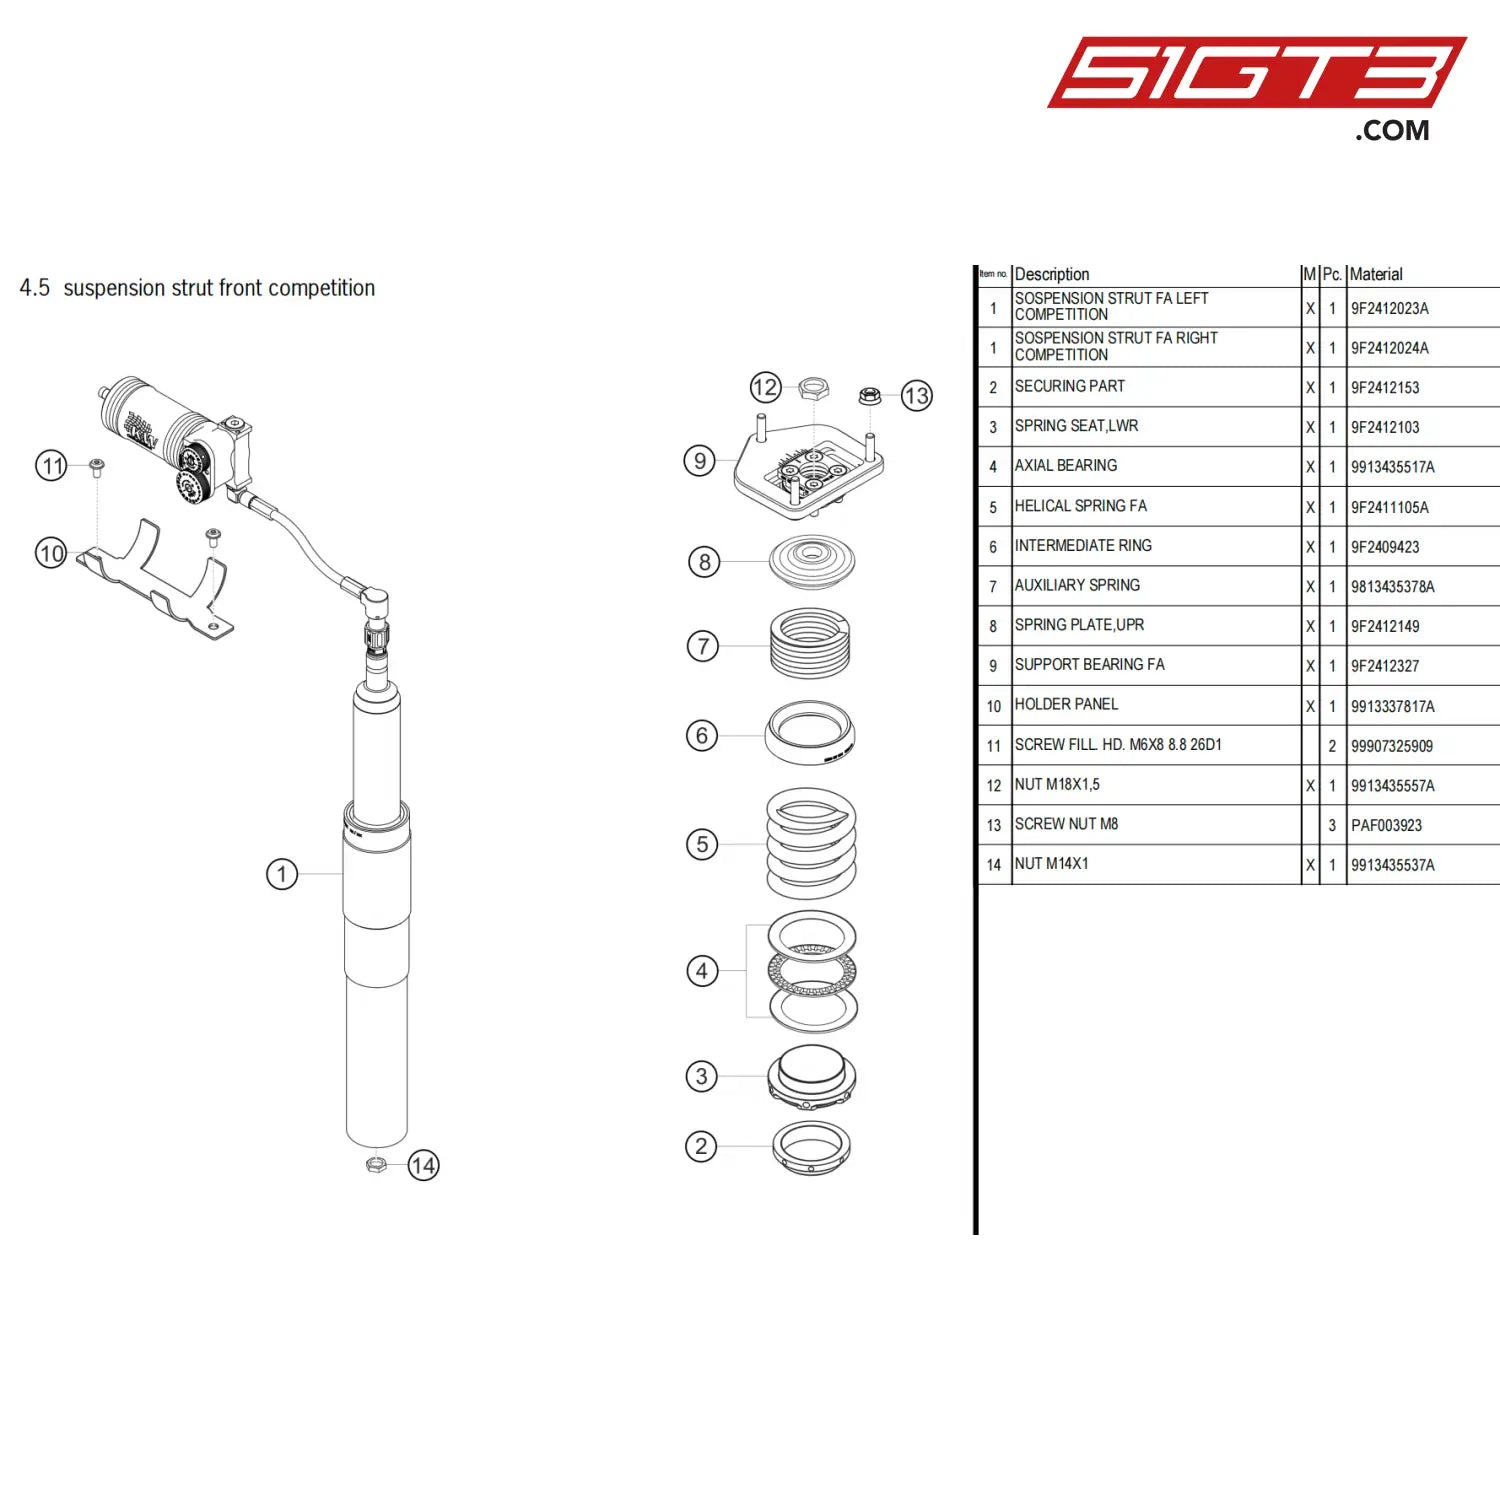 Holder Panel - 9913337817A [Porsche 718 Cayman Gt4 Clubsport] Suspension Strut Front Competition